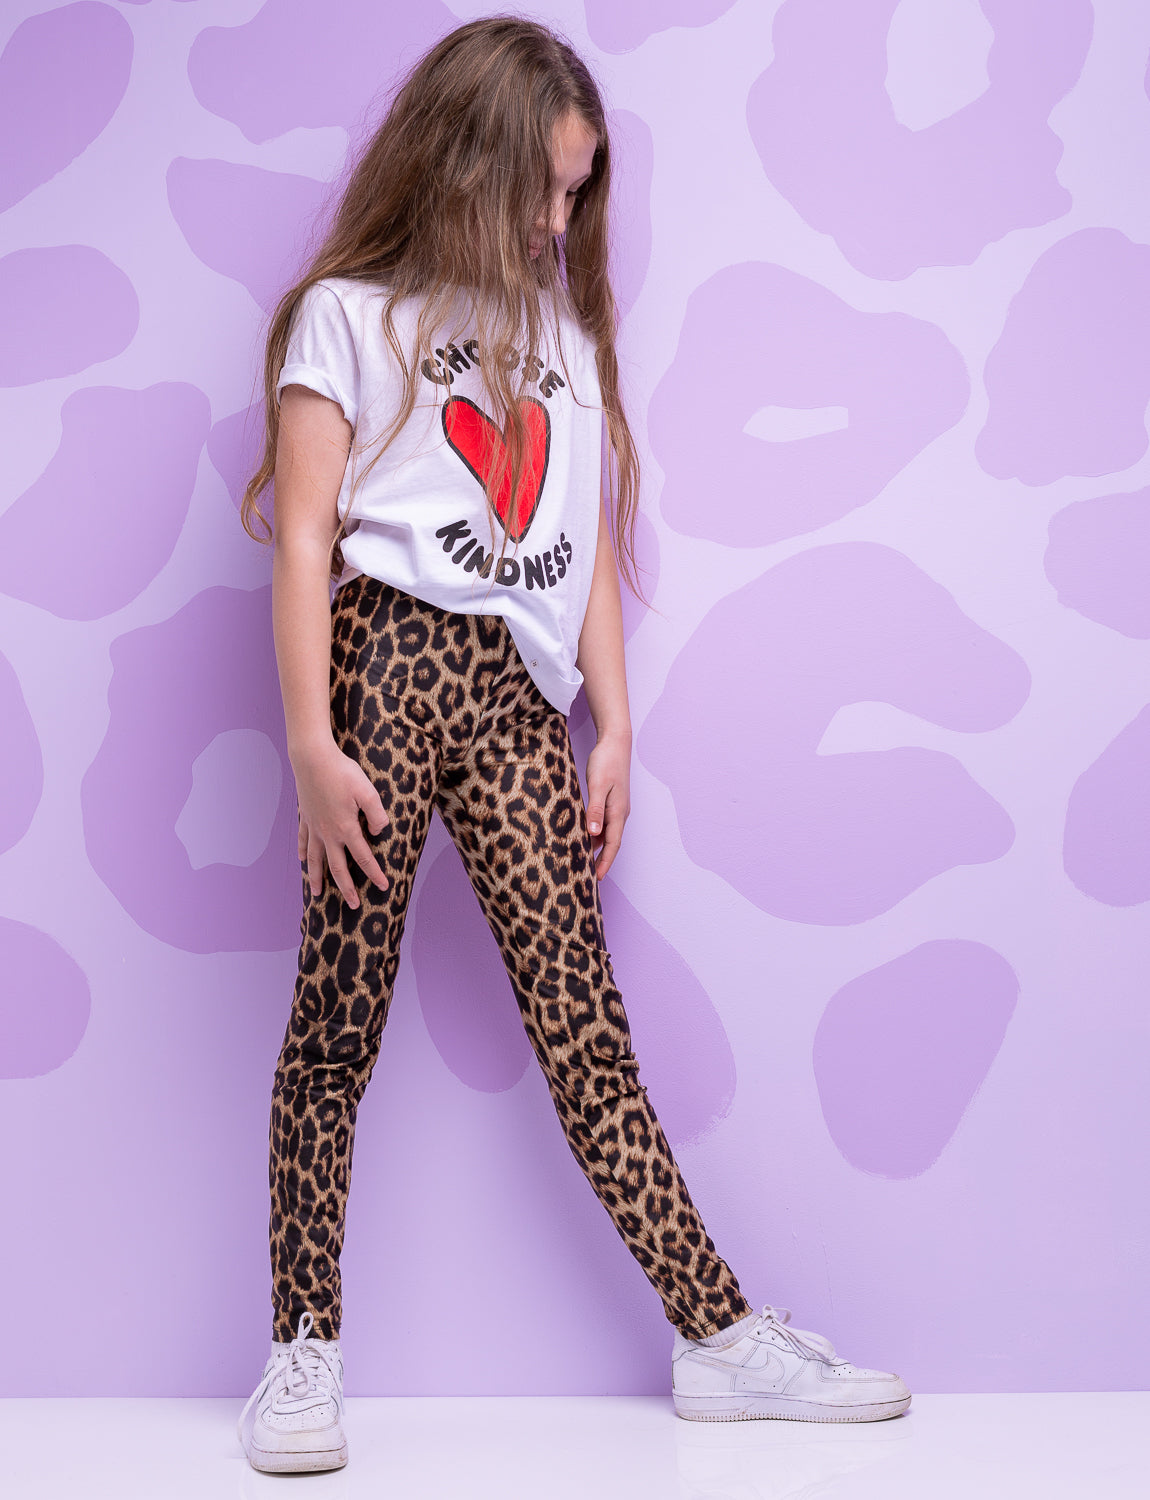 Leopard Print Colorblock Wideband Waist Sports Leggings for Sale Australia|  New Collection Online| SHEIN Australia